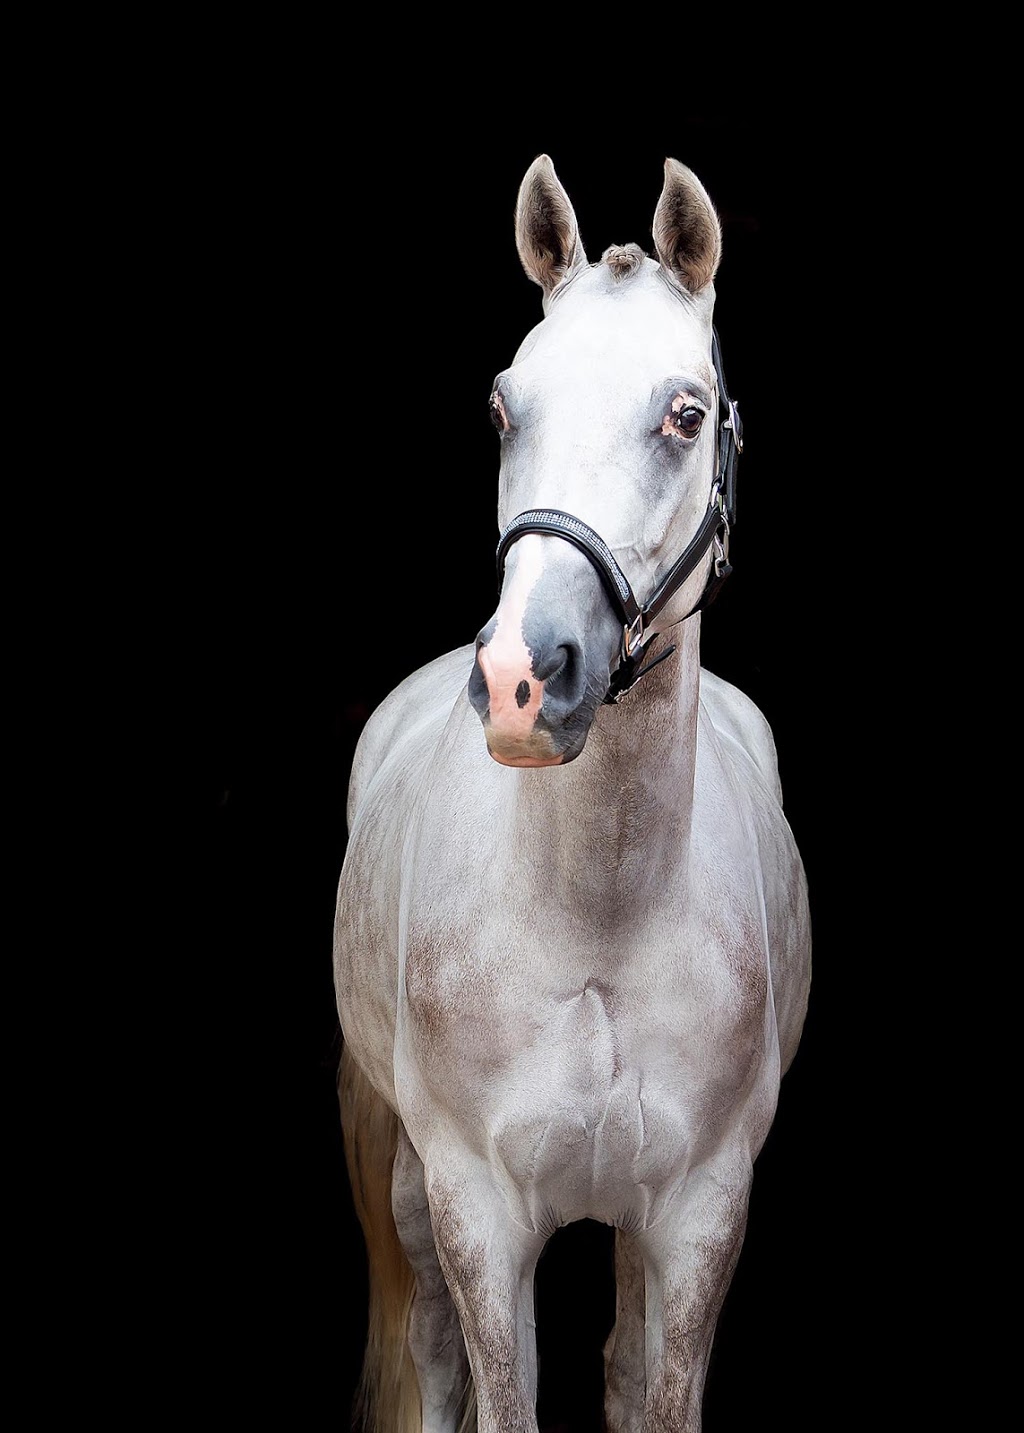 Sam Goodwin Horse Portraits |  | 58 Perima Rd, Elimbah QLD 4516, Australia | 0409476043 OR +61 409 476 043